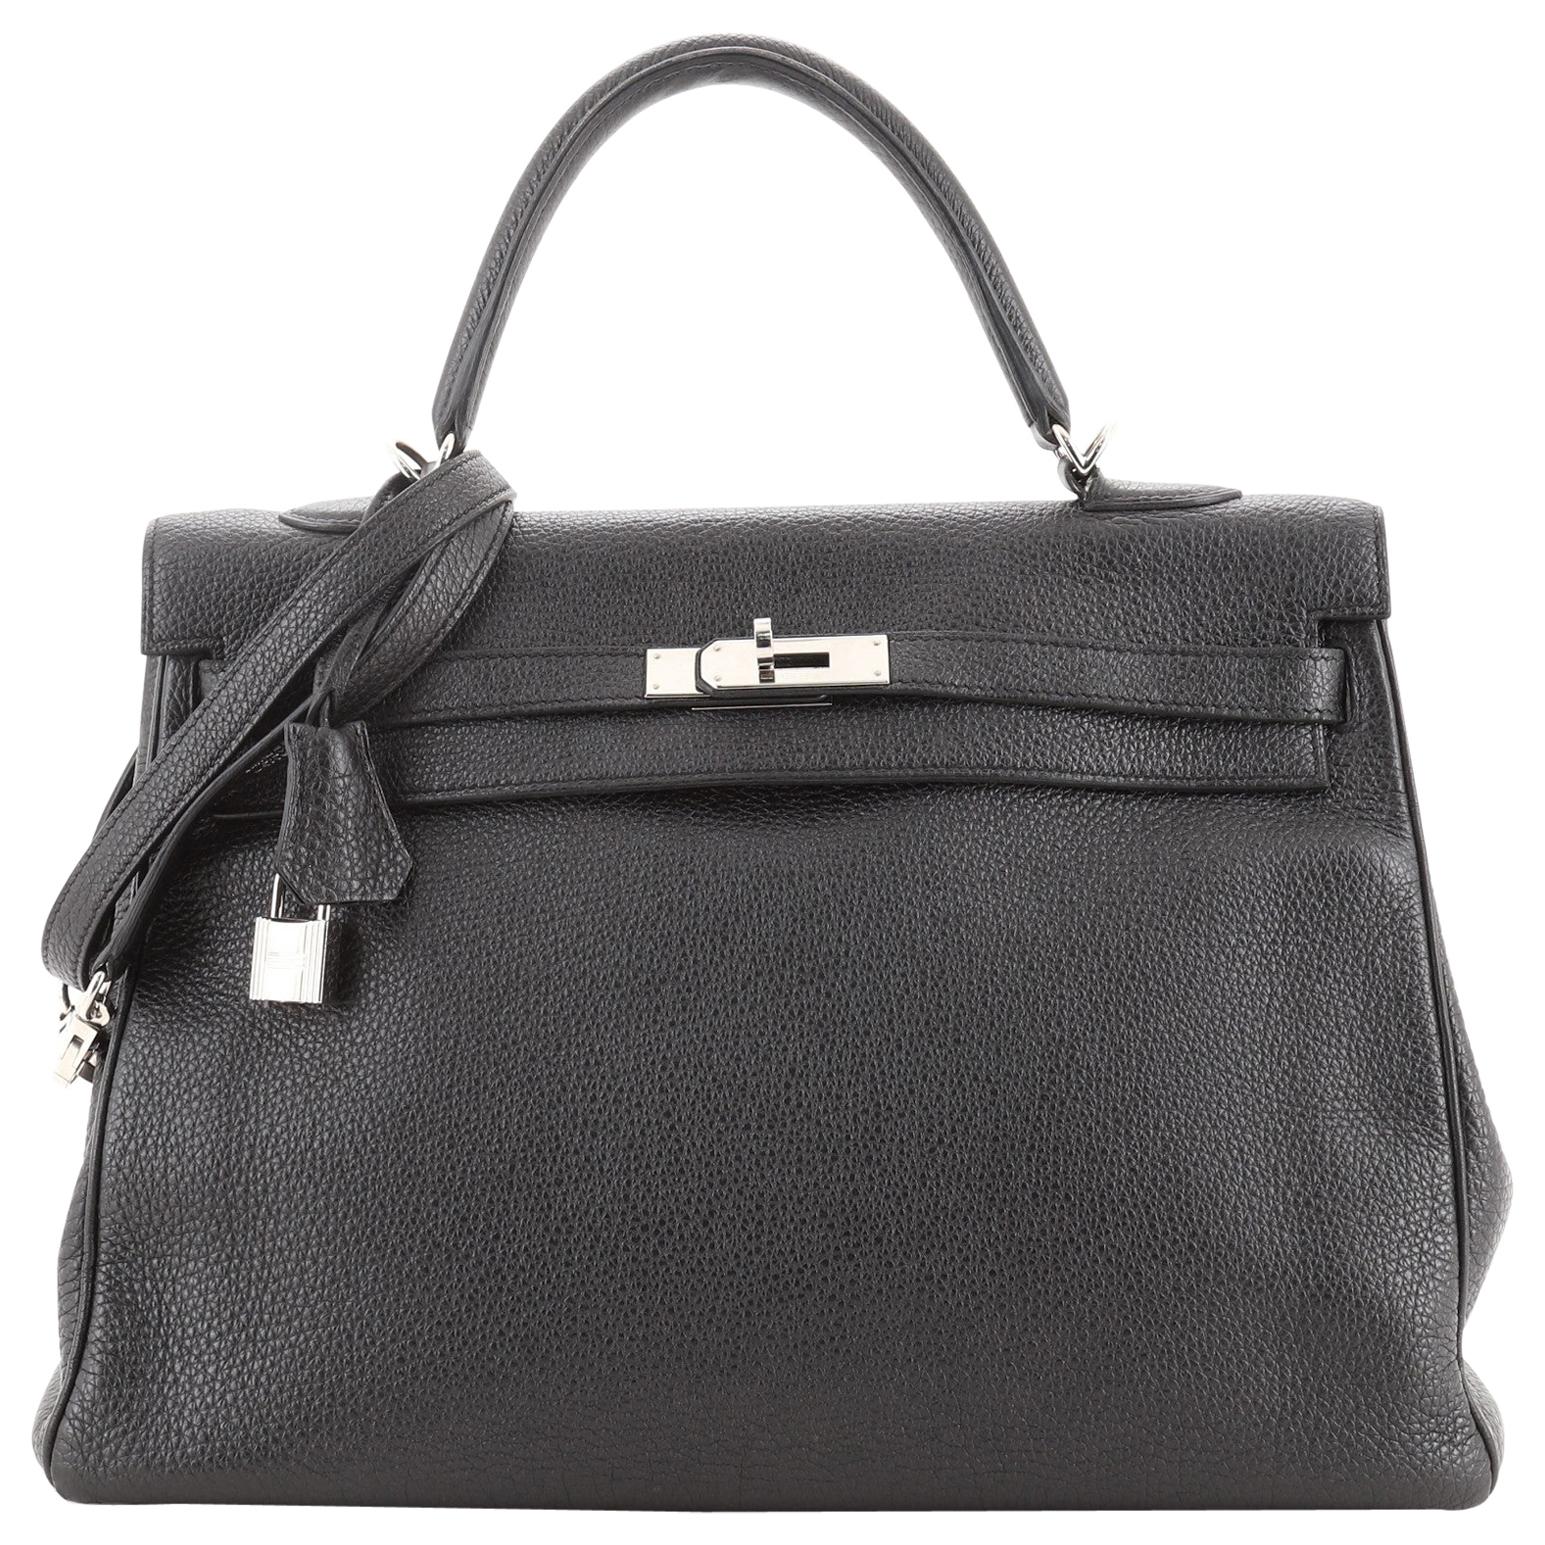 Hermes Kelly Handbag Noir Togo with Palladium Hardware 35